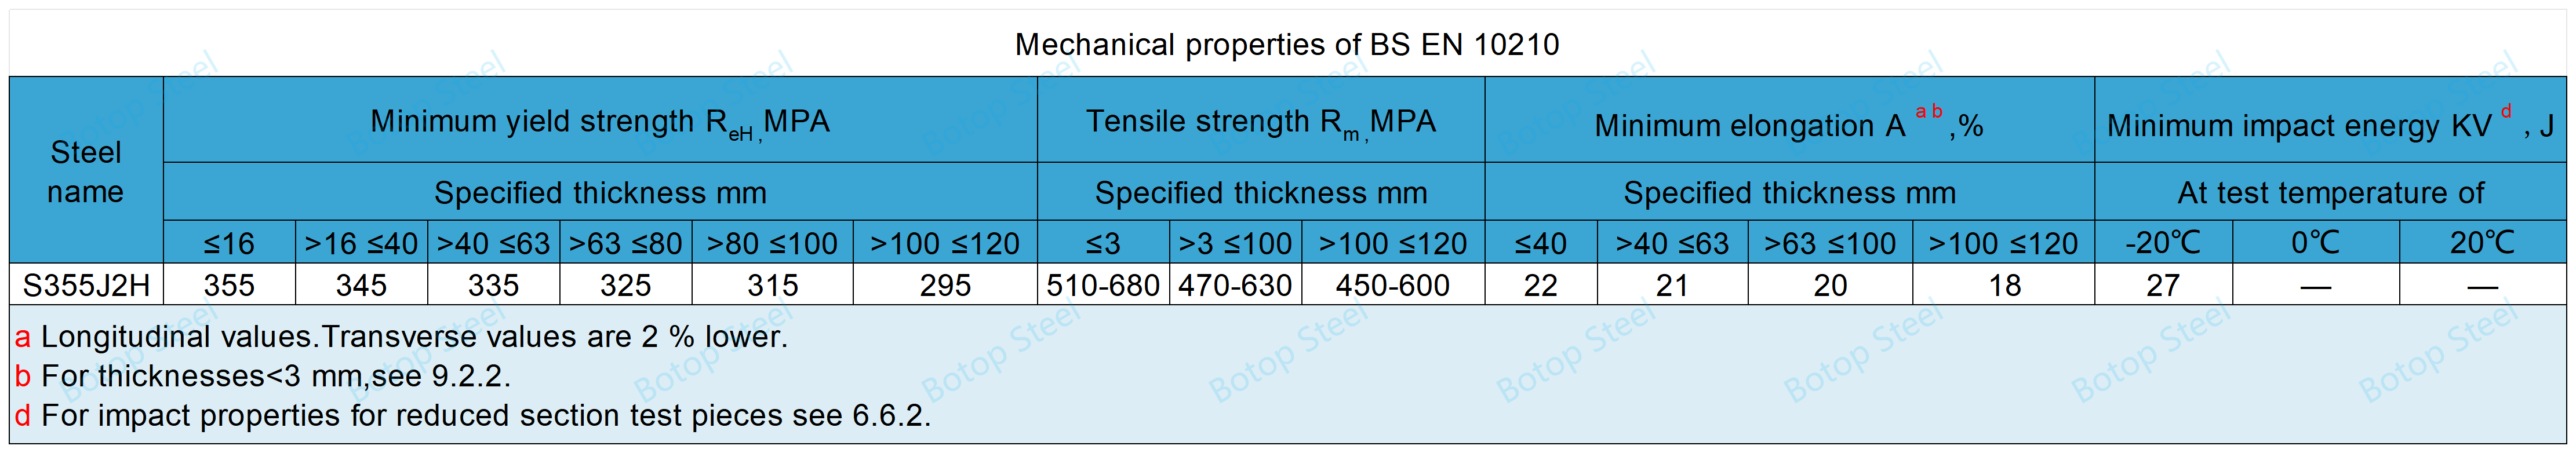 Mechanical properties of BS EN 10210-S355J2H